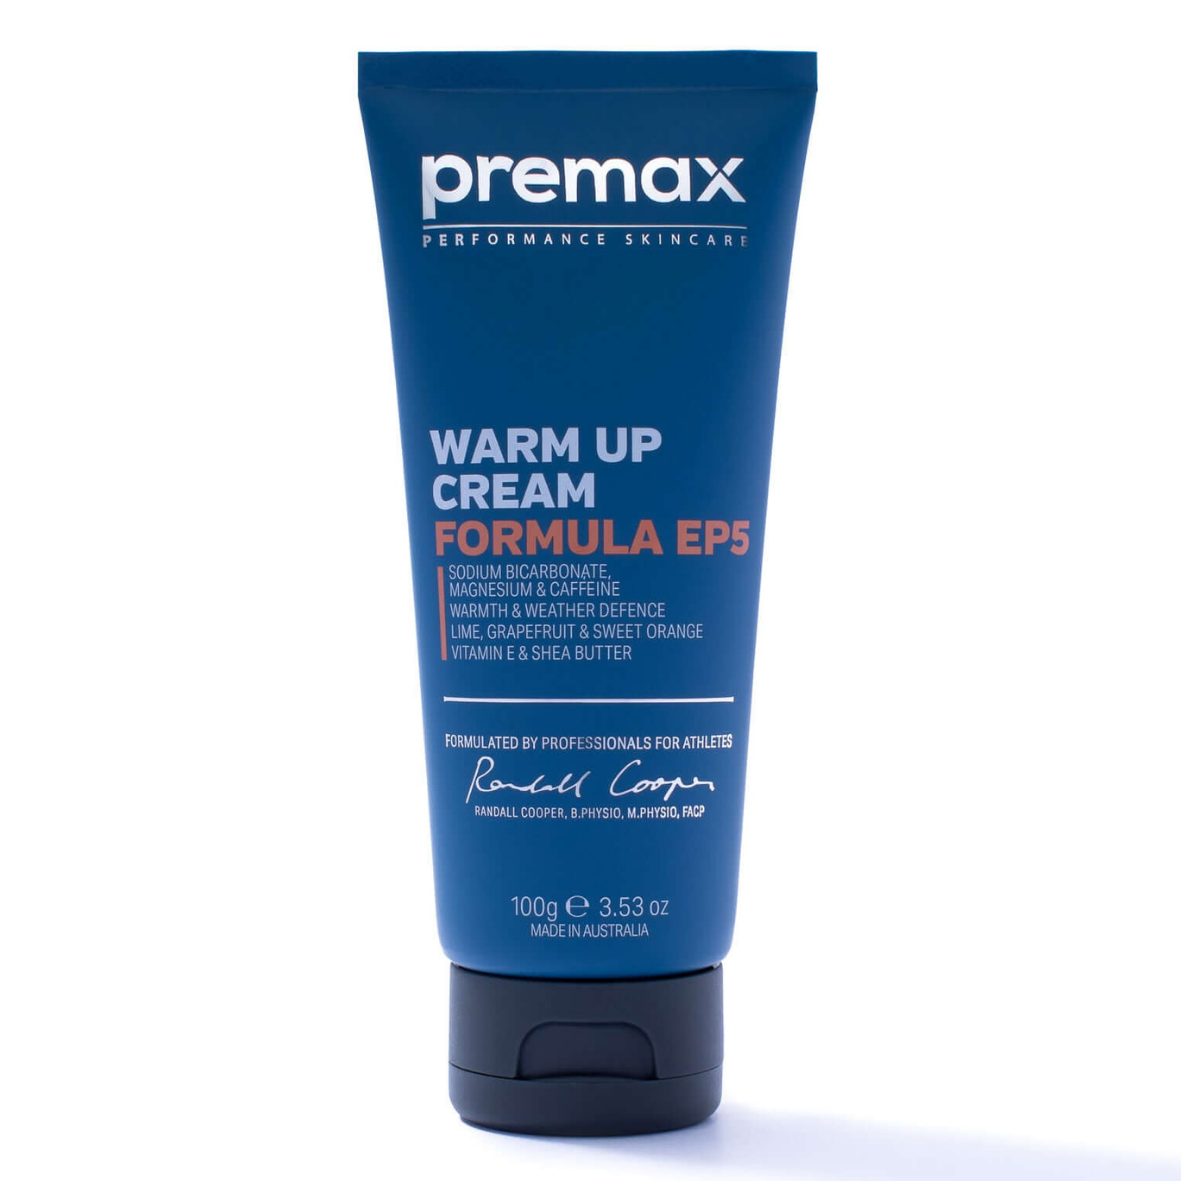 Premax warm up cream formula EP5